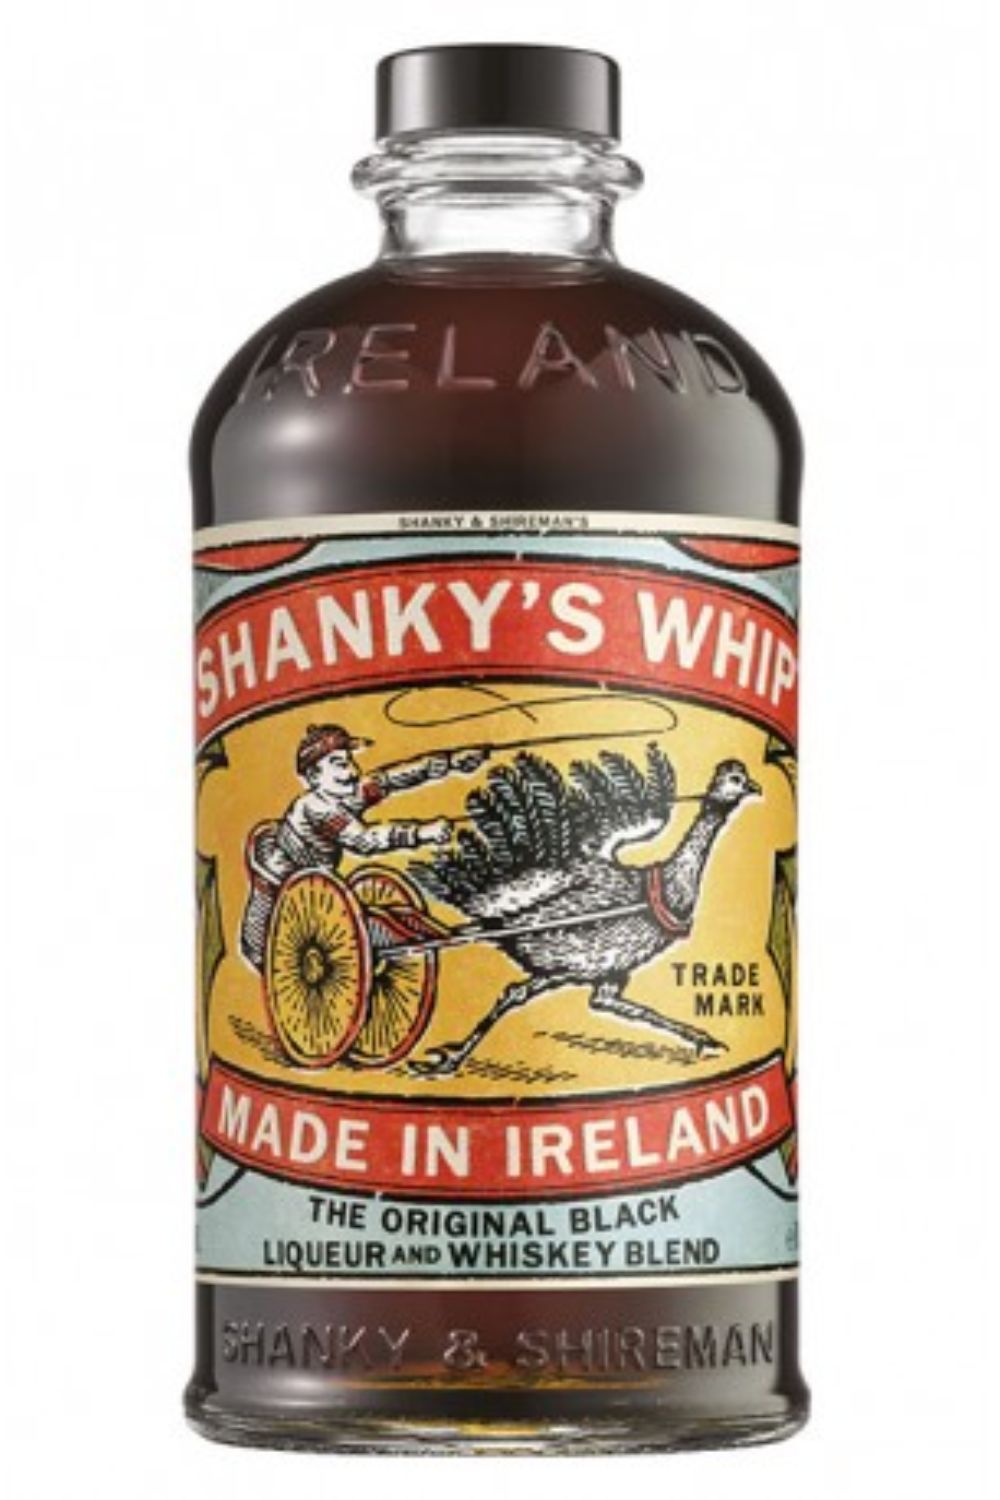 Shanky’s Whip Black Irish Whiskey Liqueur